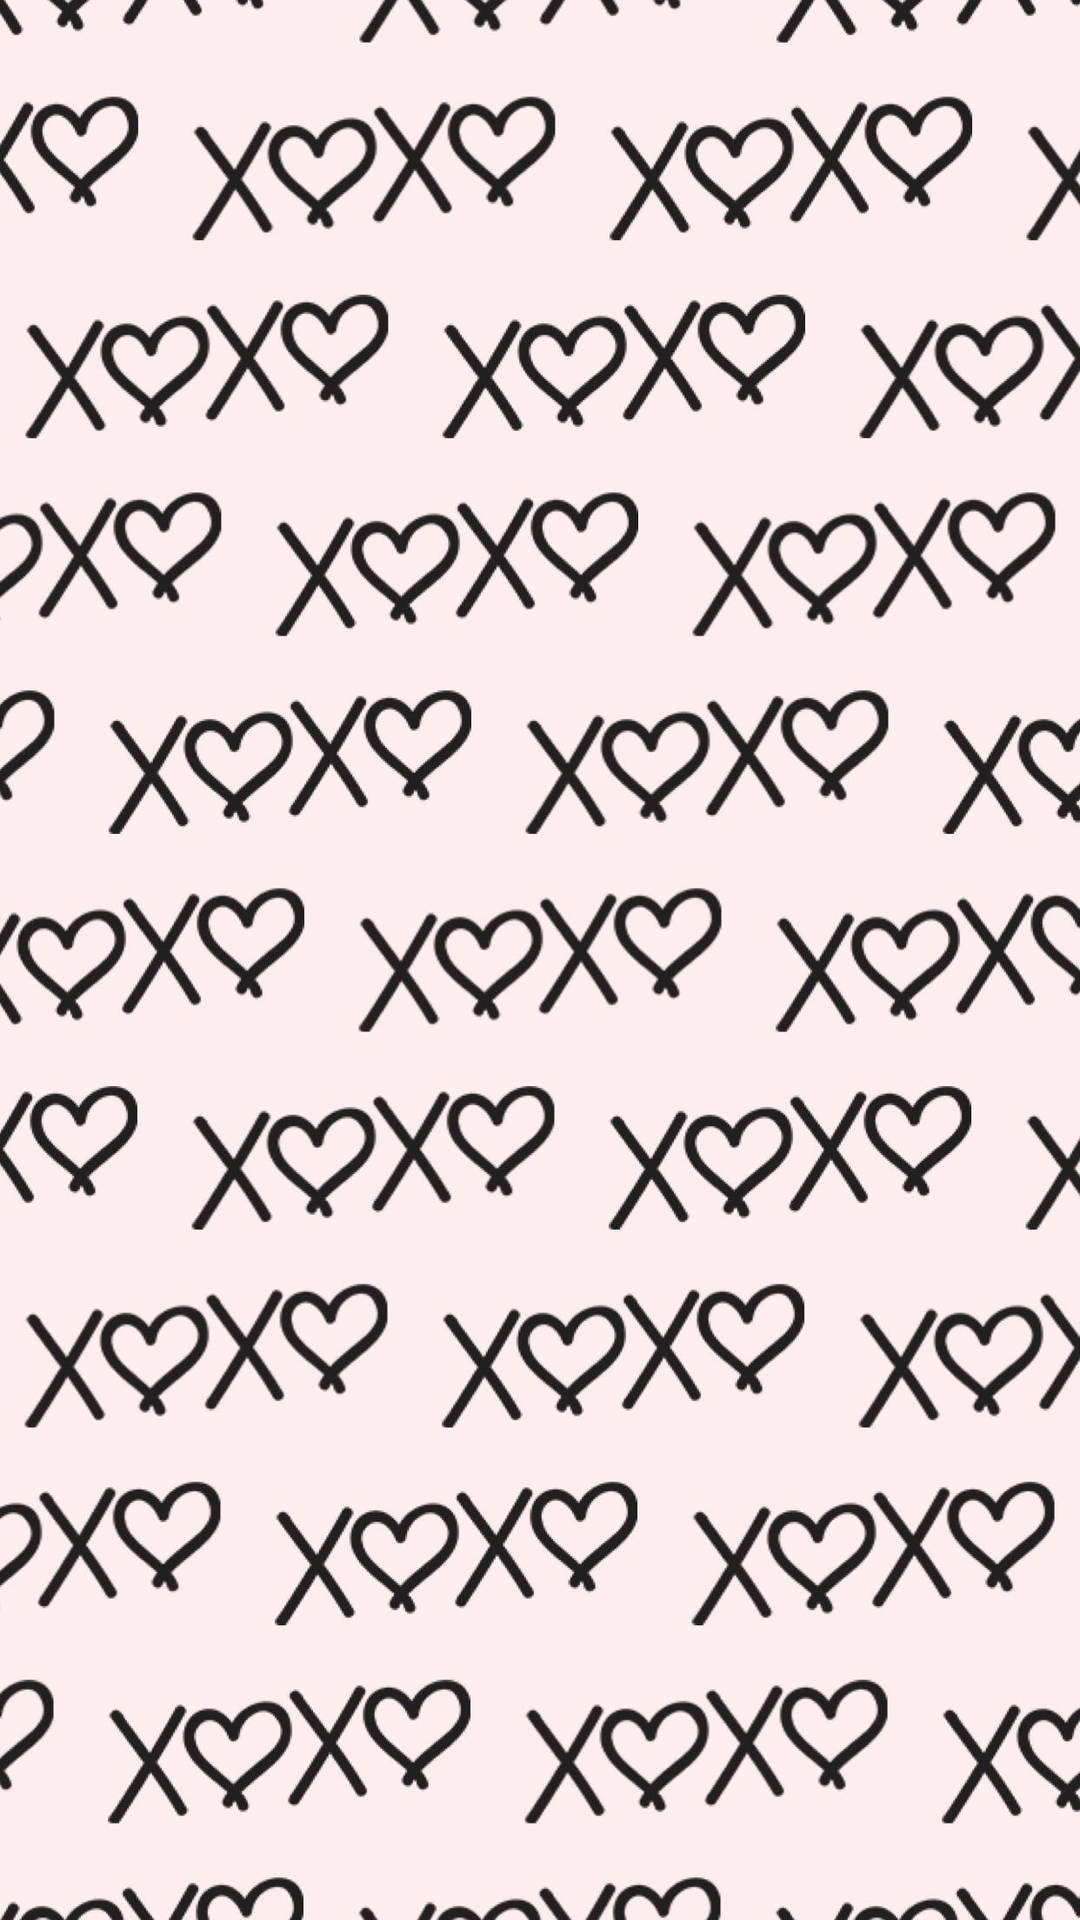 Xoxo Hearts Cute Iphone Lock Screen Wallpaper